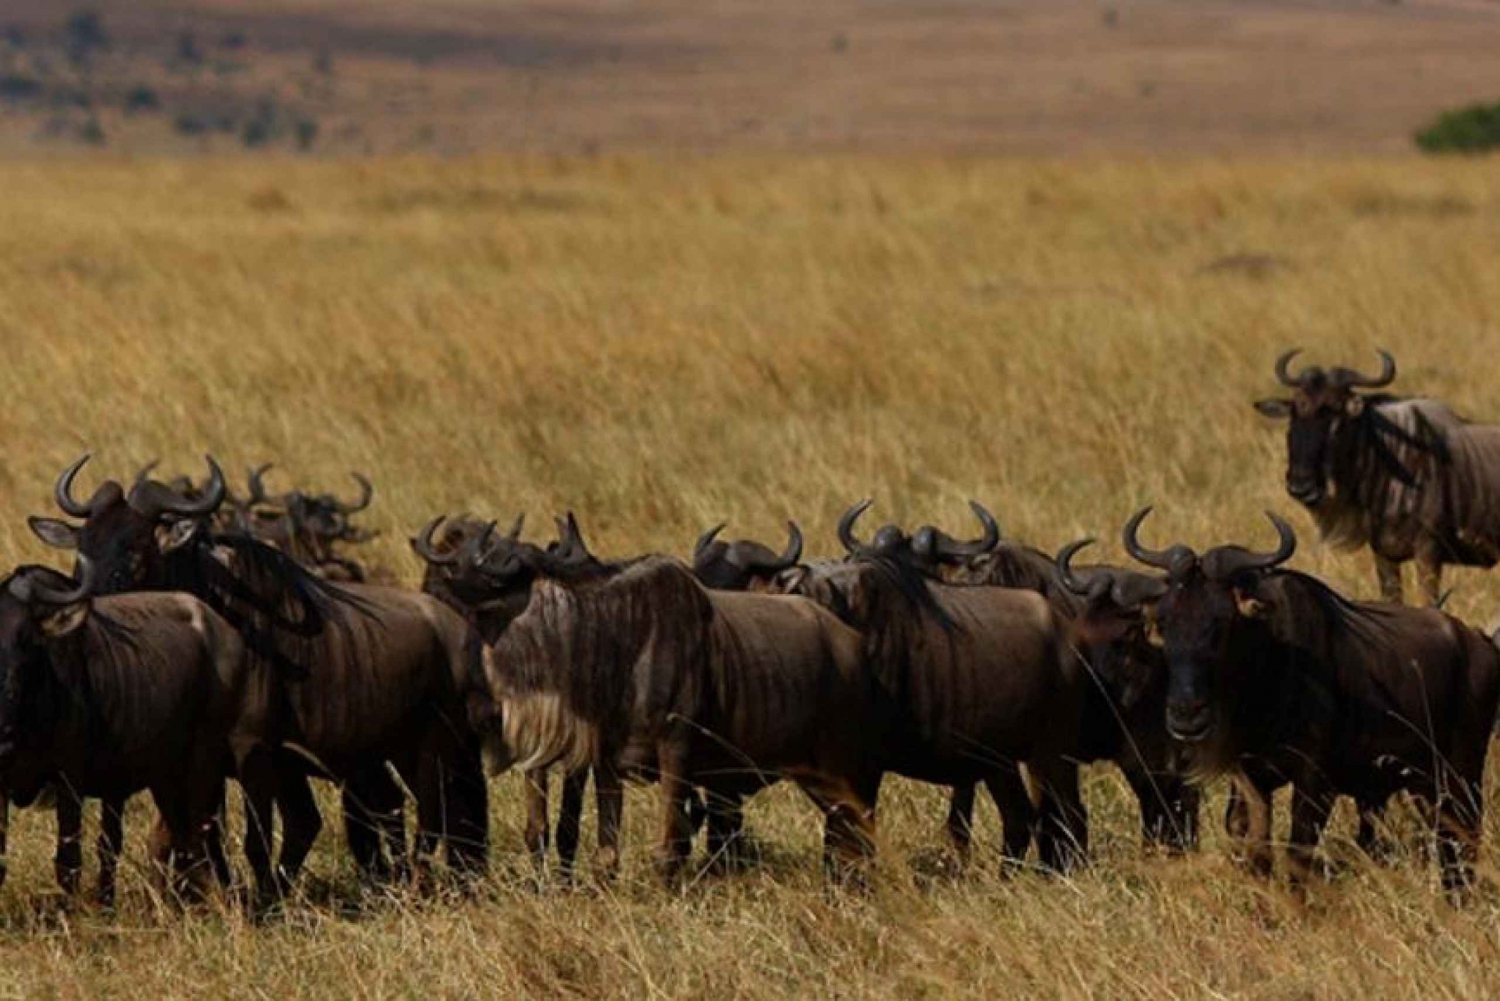 Van Nairobi: privé driedaagse safari naar Masai Mara